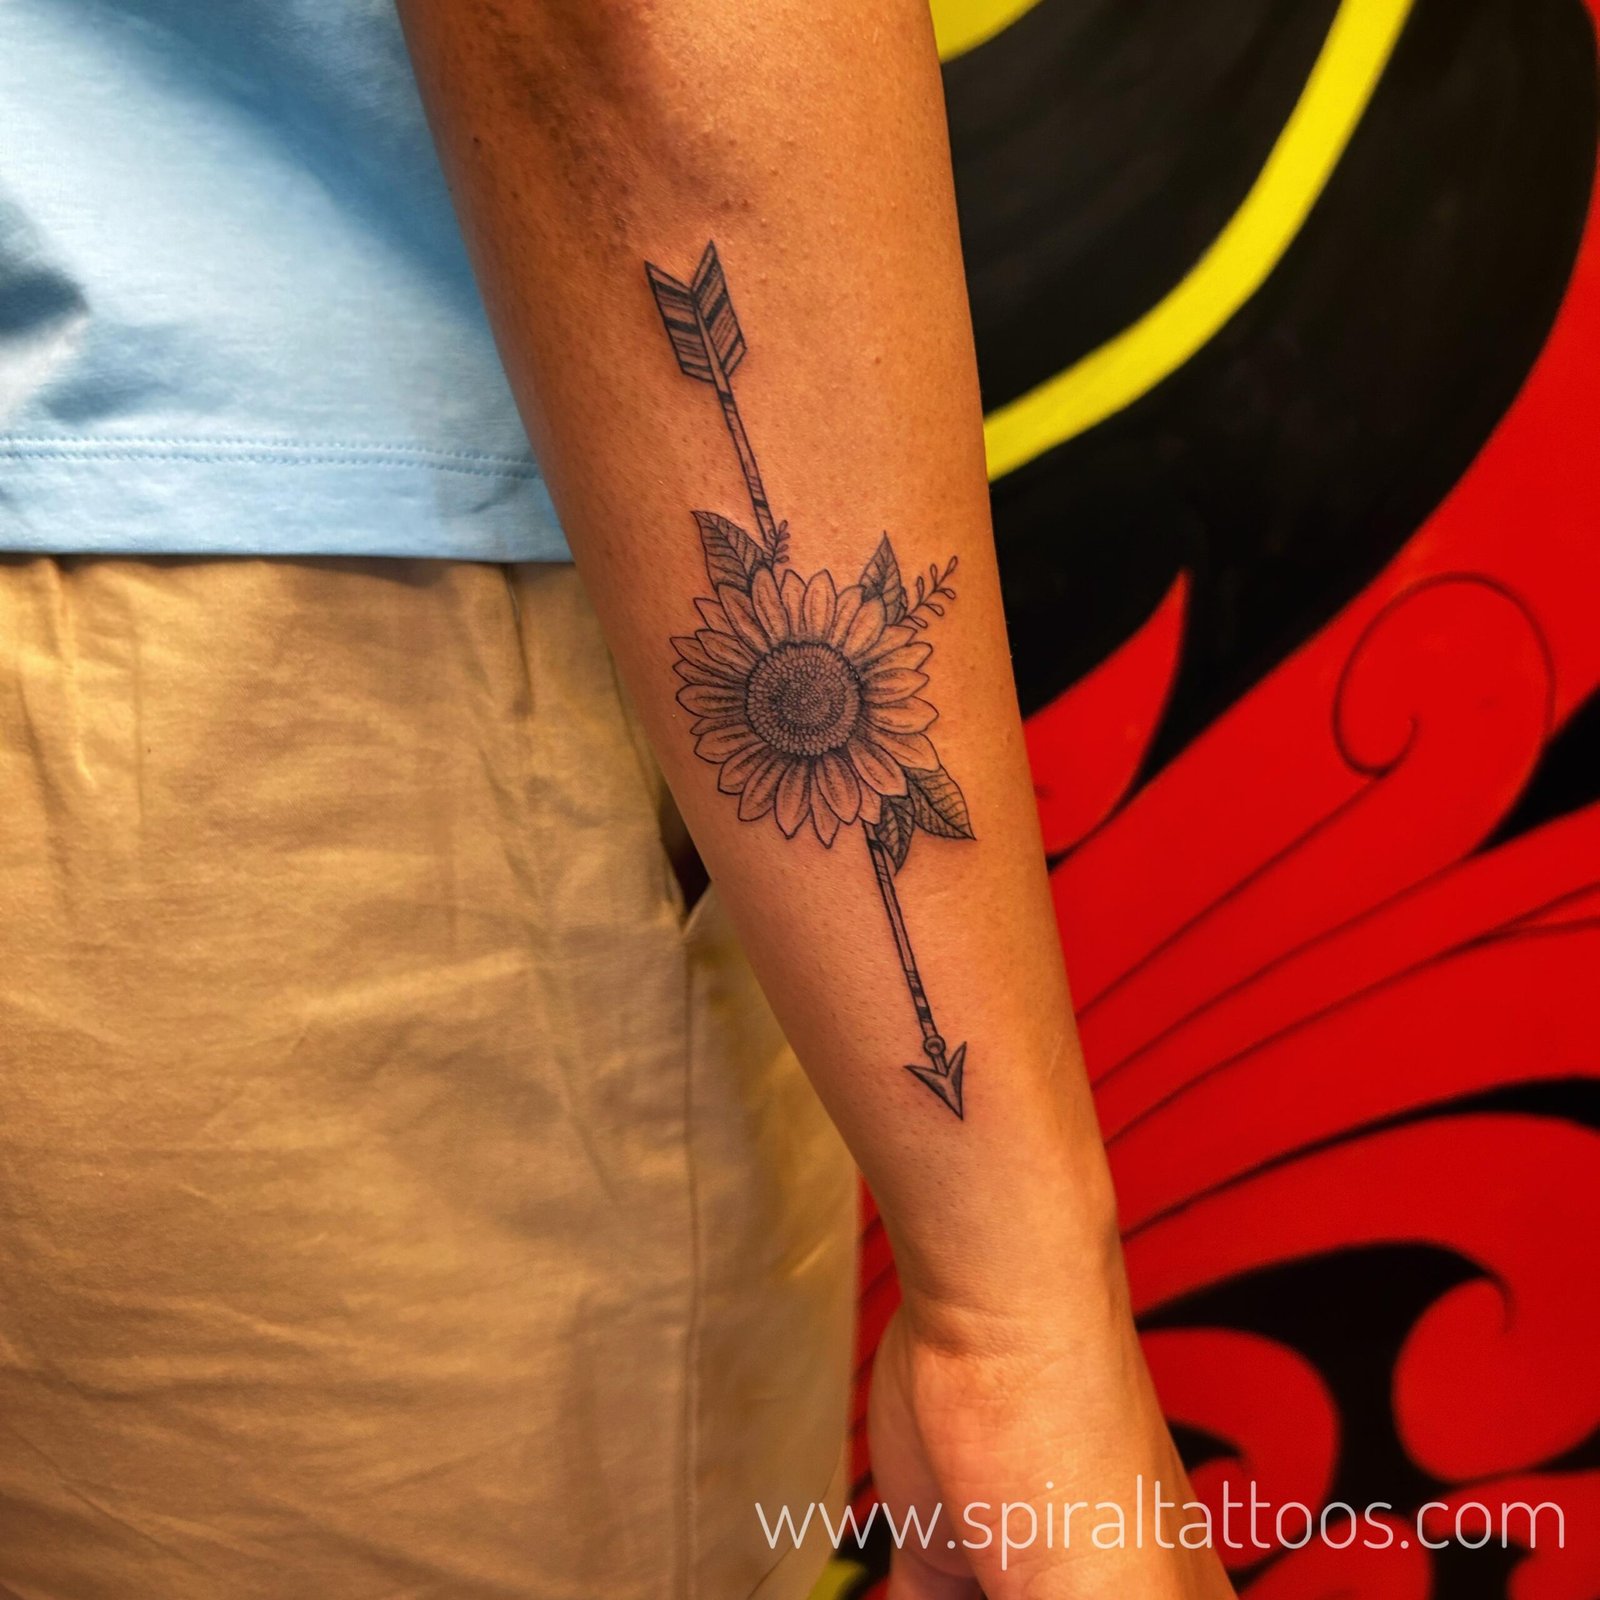 Hand tattoo art